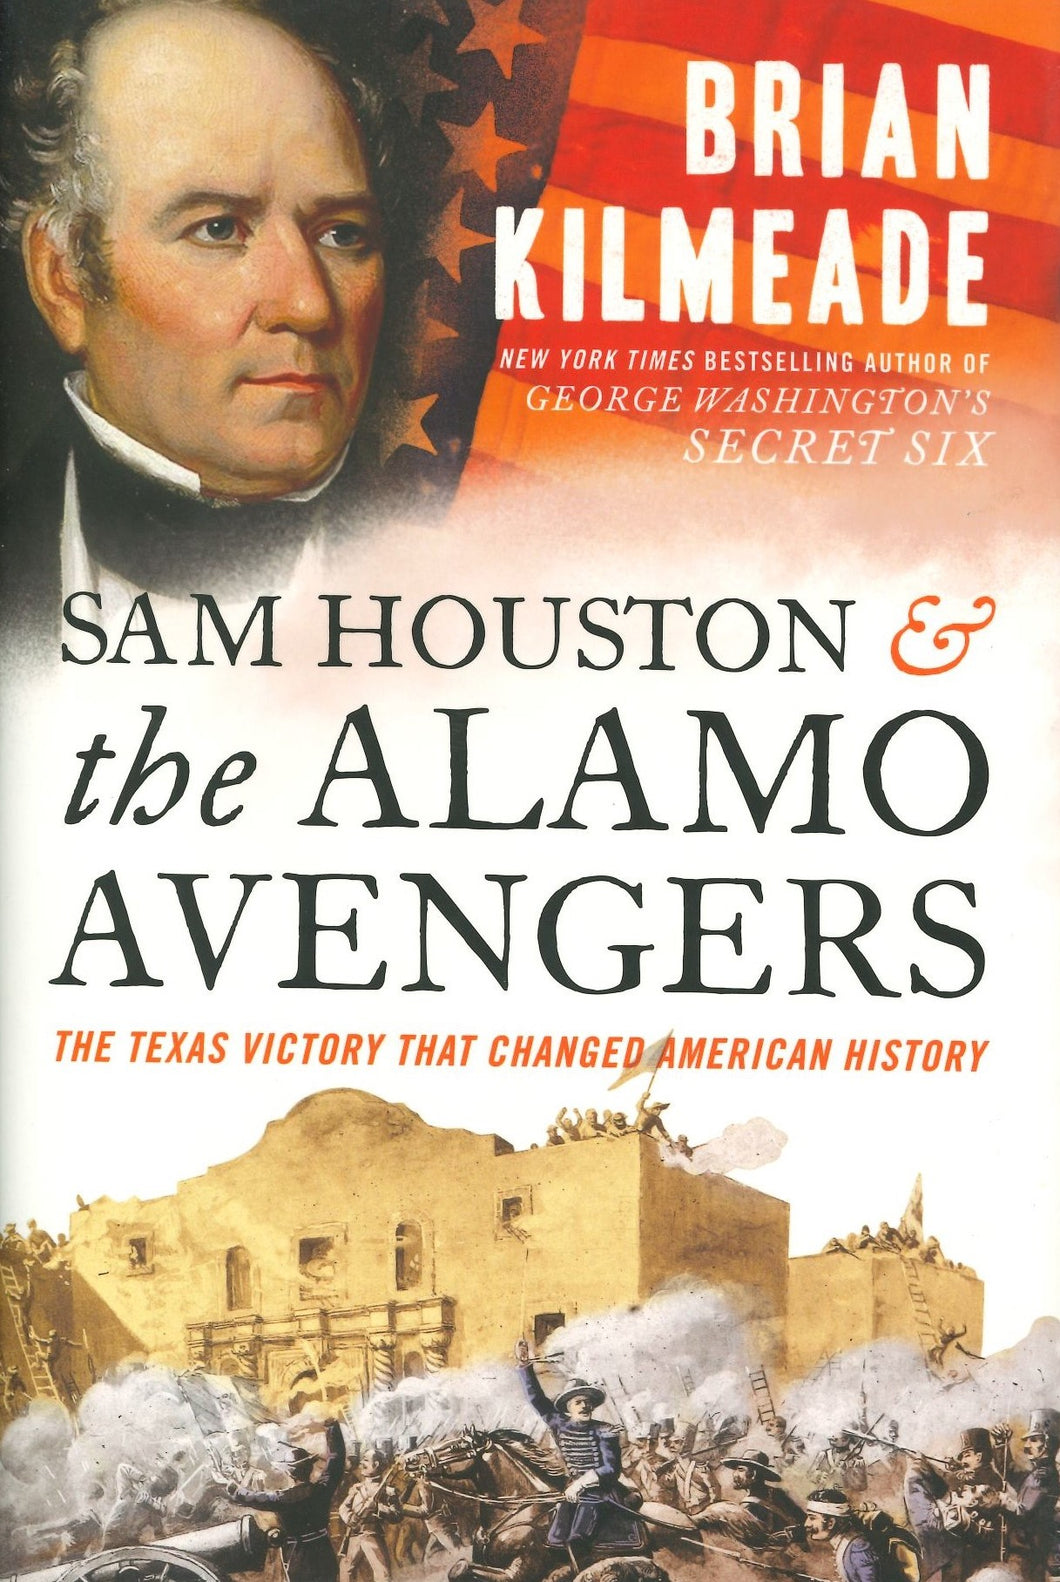 Sam Houston & the Alamo Avengers by Brian Kilmeade